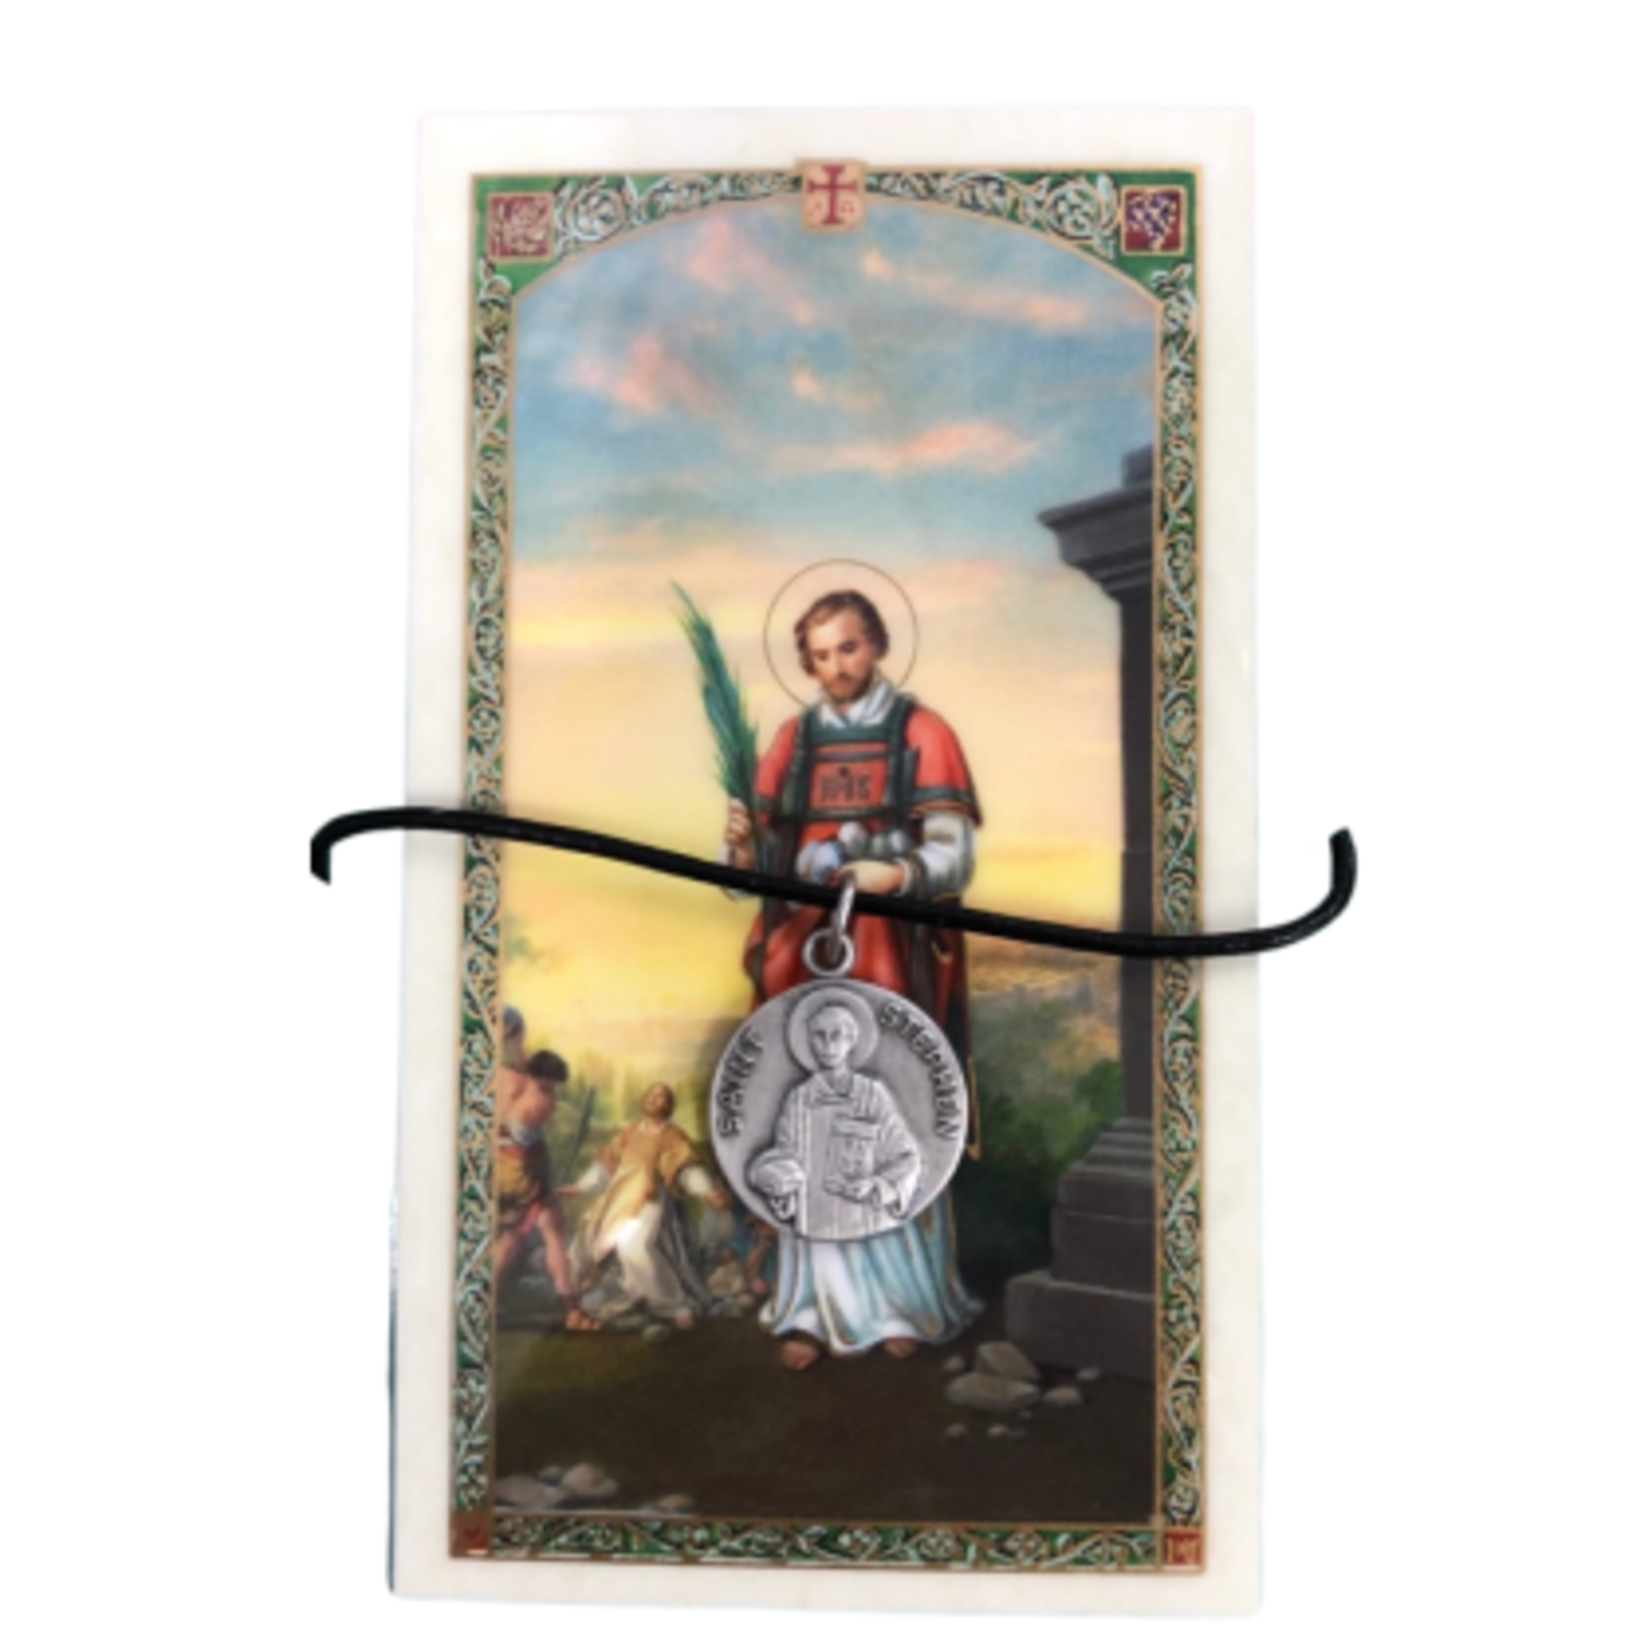 Saint Stephen Pewter Medal and Prayer Card Set